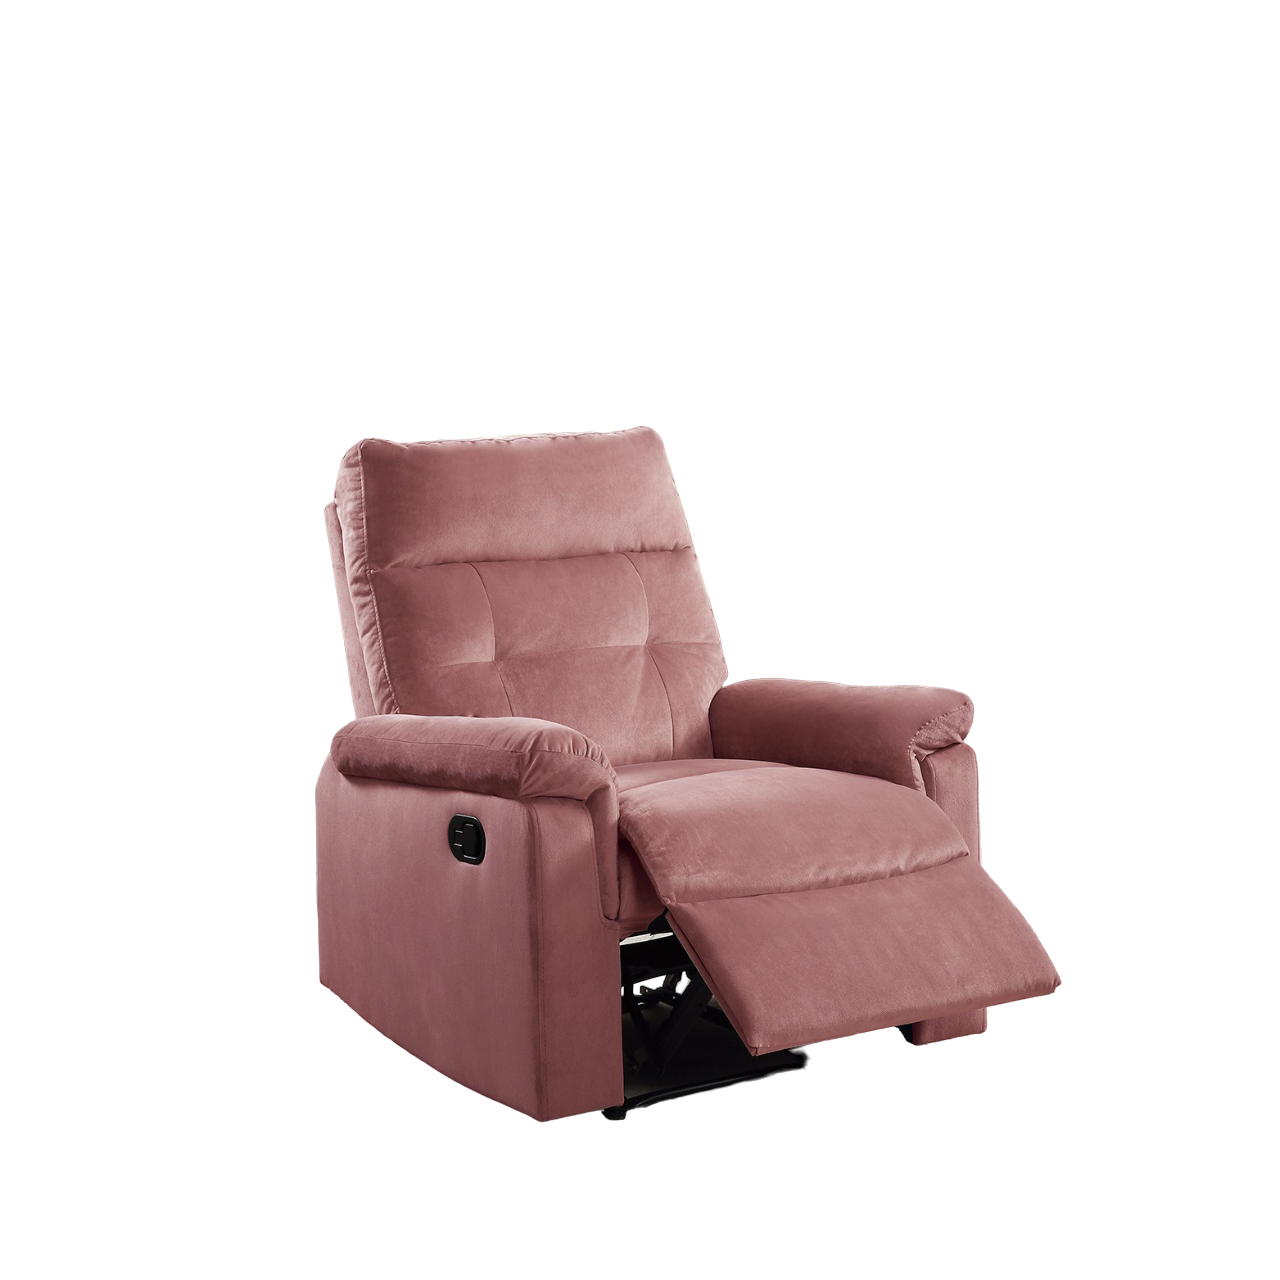 Luxurious Velvet Blush Pink Color Motion Recliner pink-velvet-manual-handle-metal-primary living